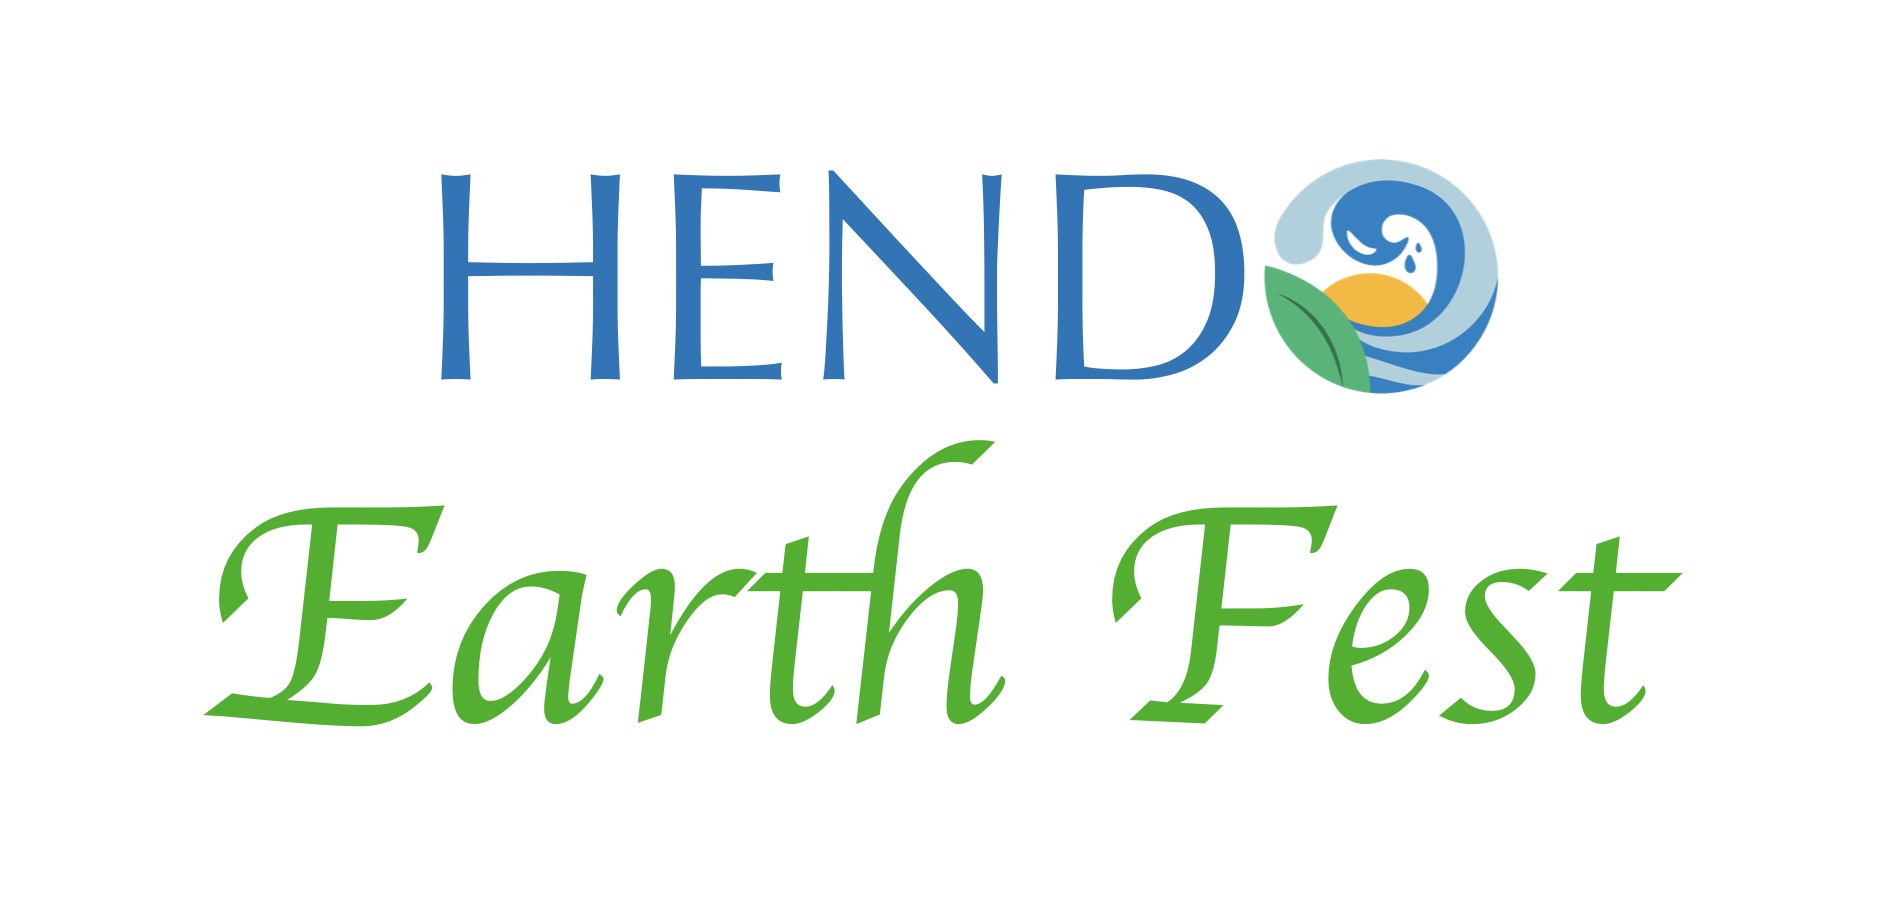 Hendo Earth Fest